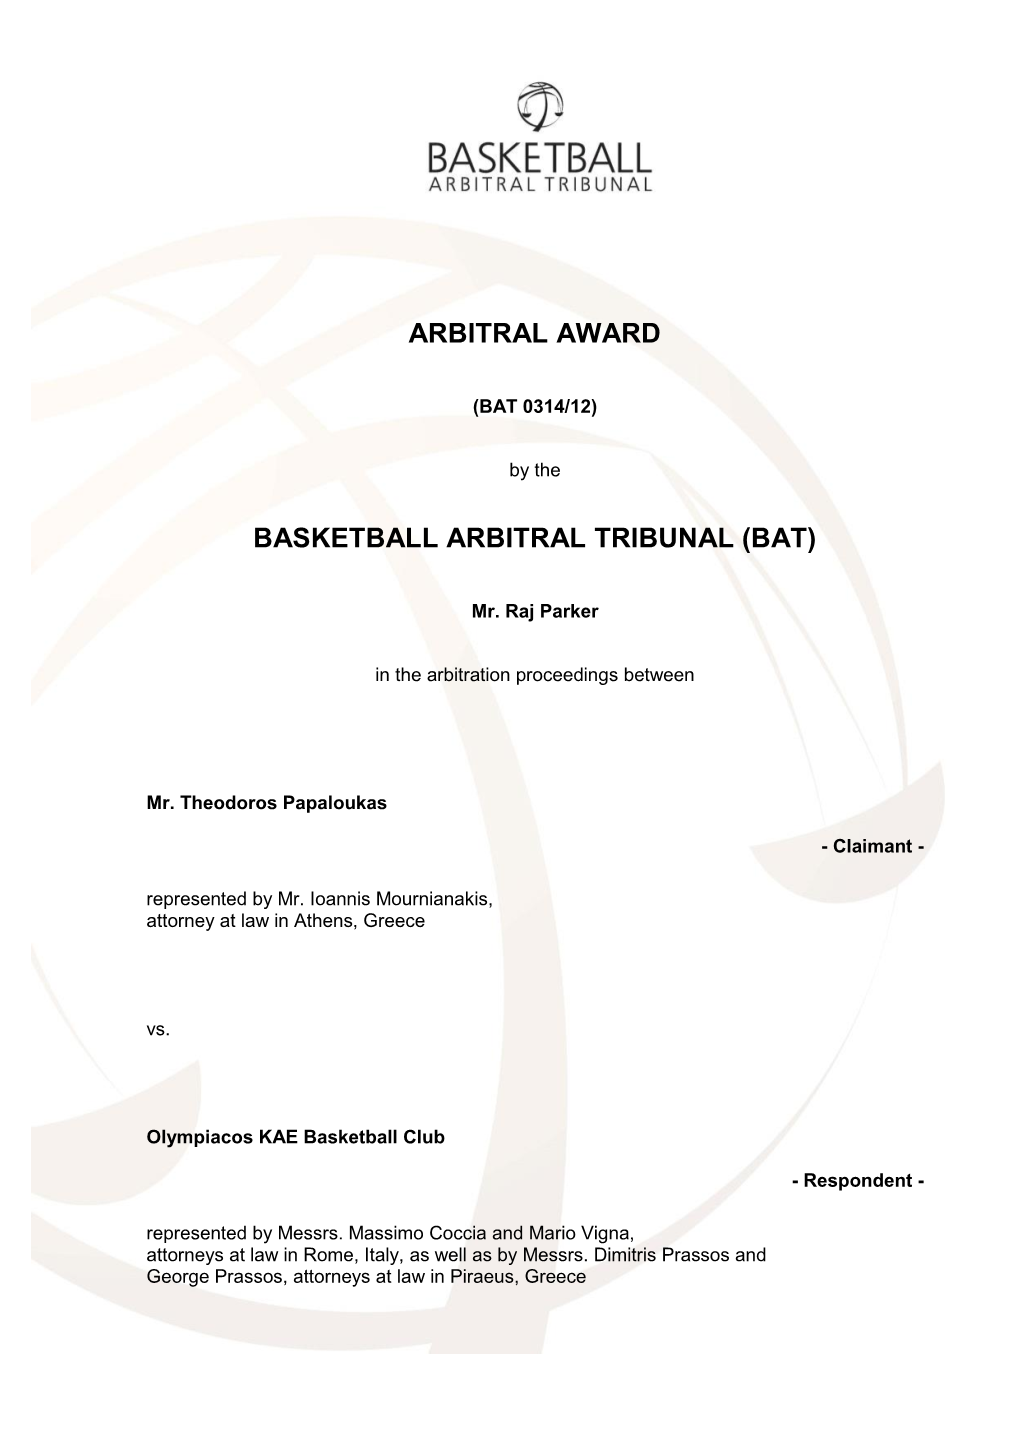 Basketball Arbitral Tribunal (Bat)